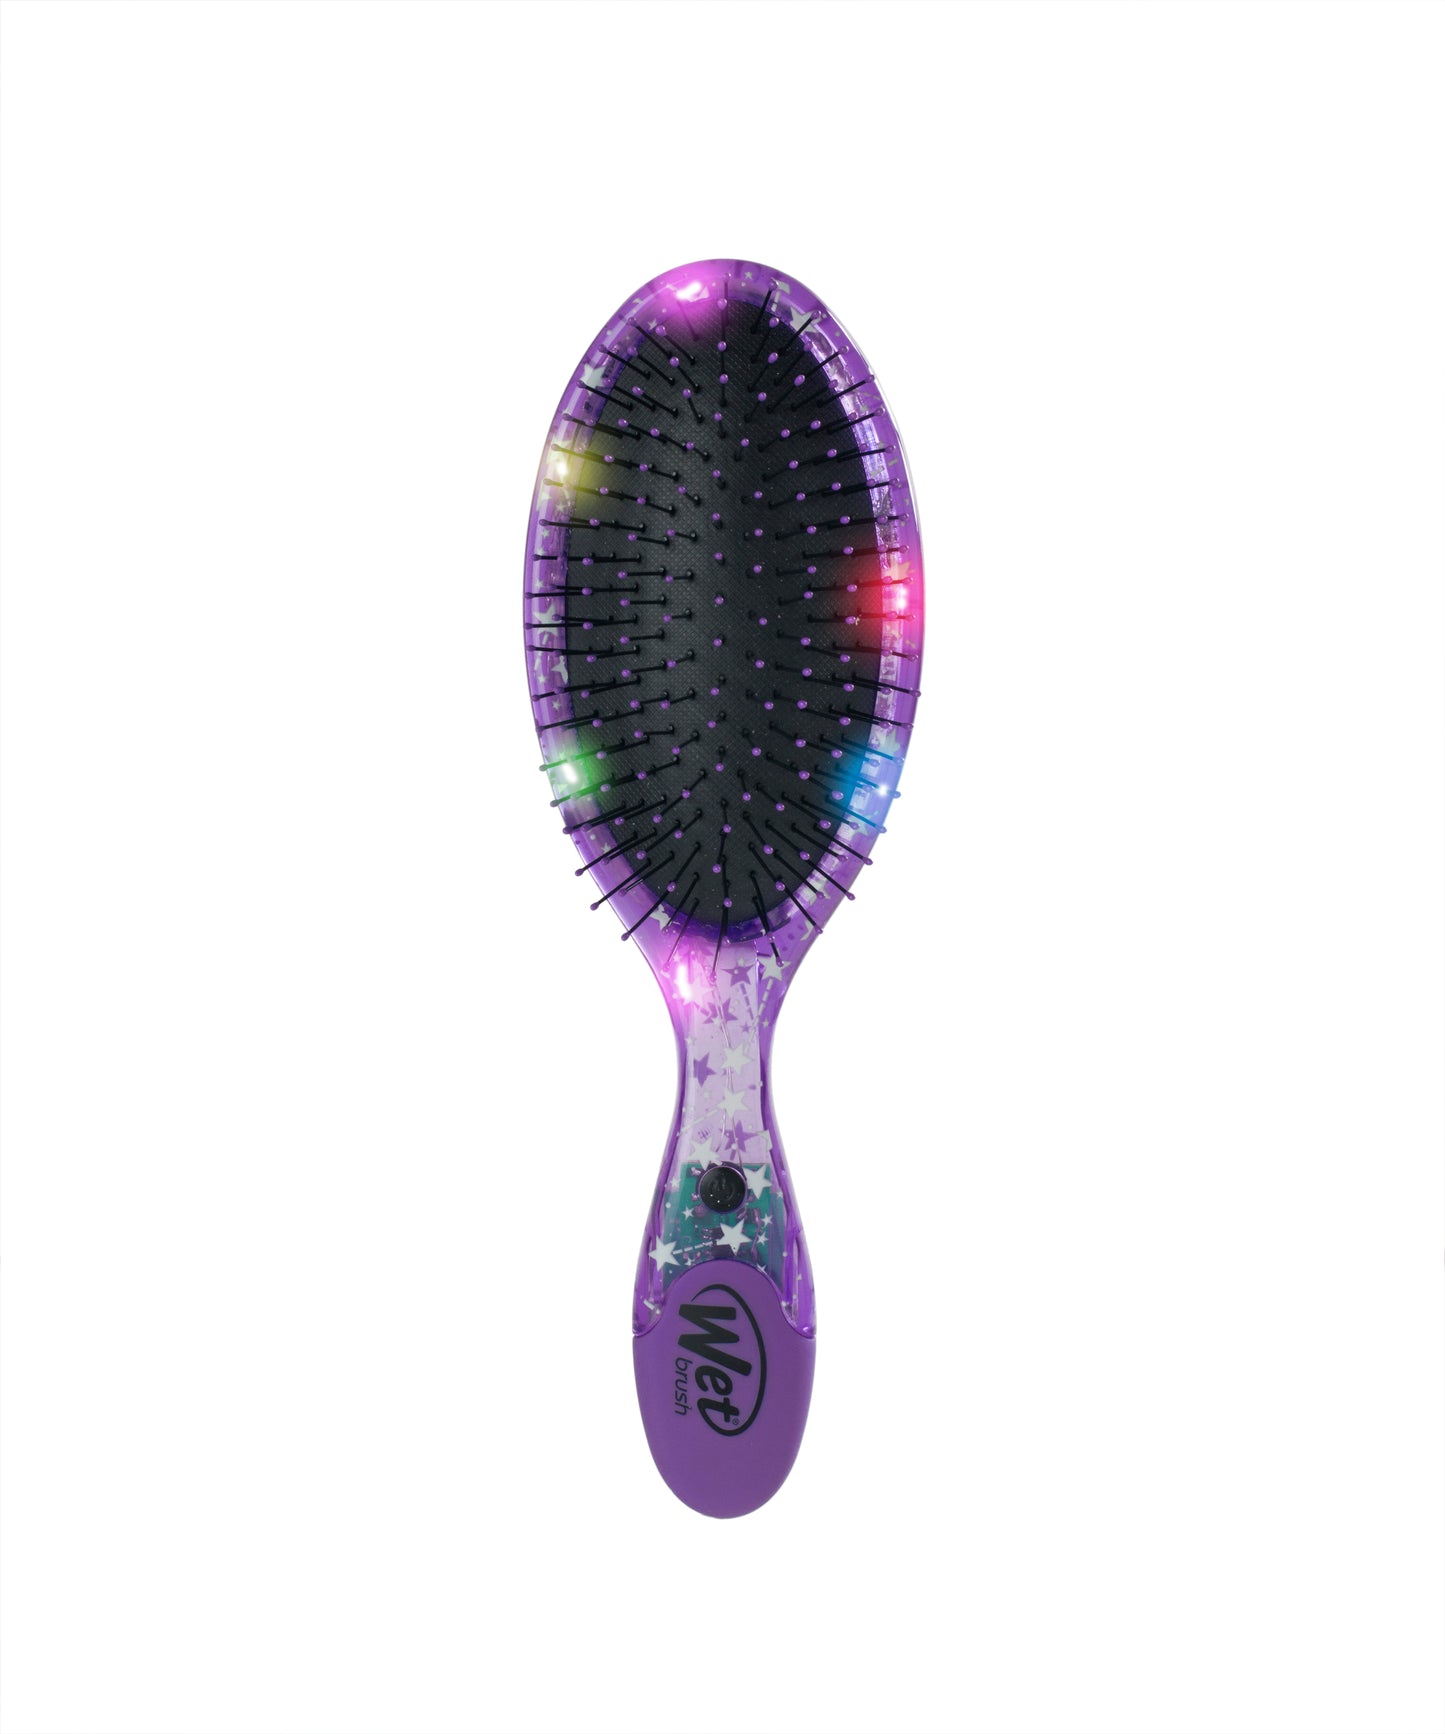 Wet Brush Hair Galaxy Lights Light Up Original Detangler - Purple Stars